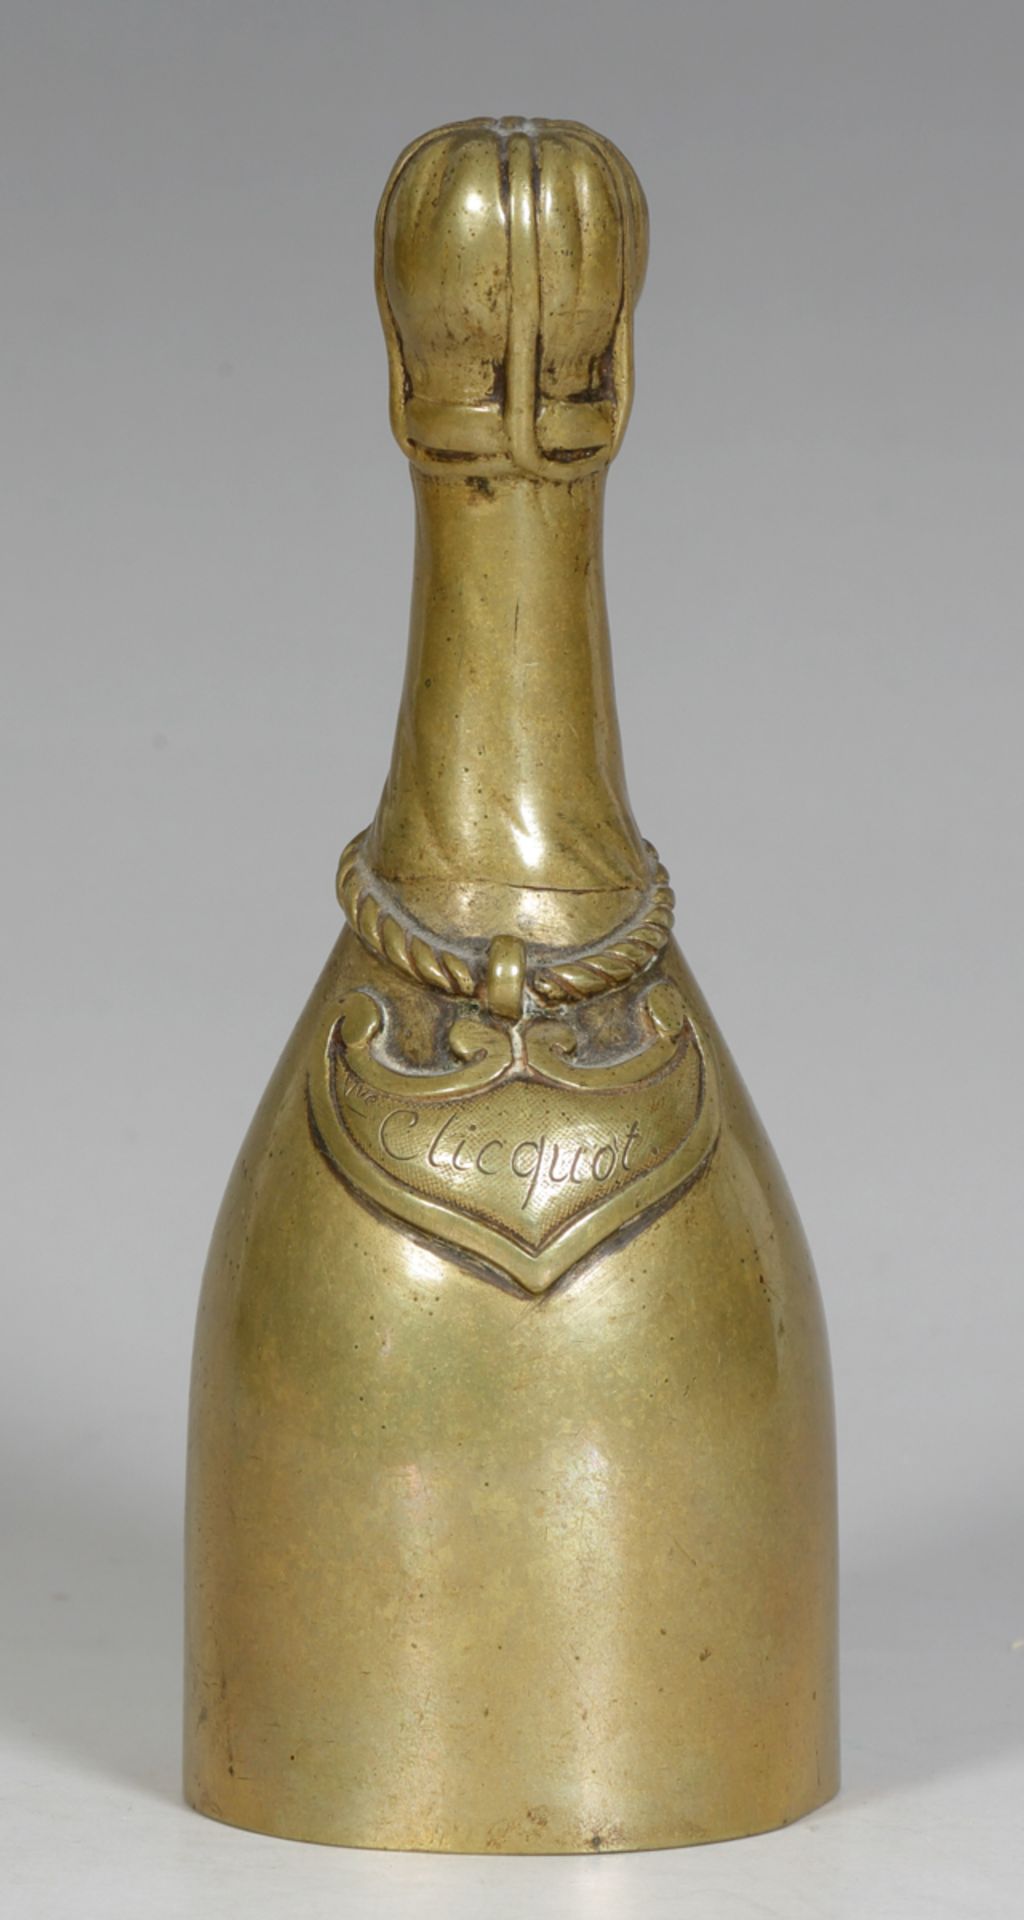 Champagner-Glocke, bez. 'Vve. Cliquot', A. 20. Jh.